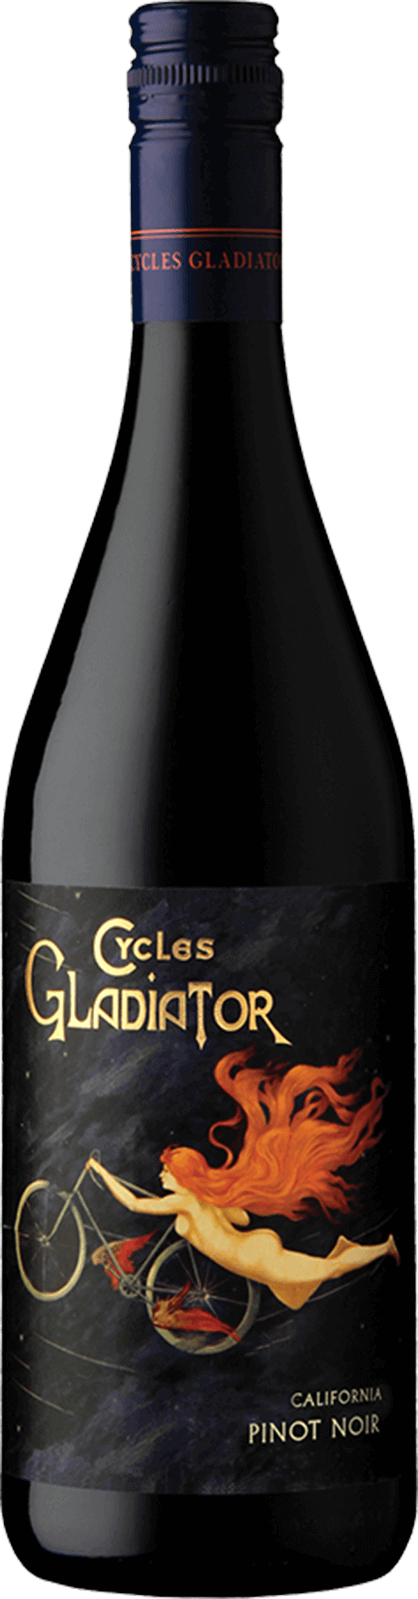 Pinot Noir Cycles Gladiator bottle